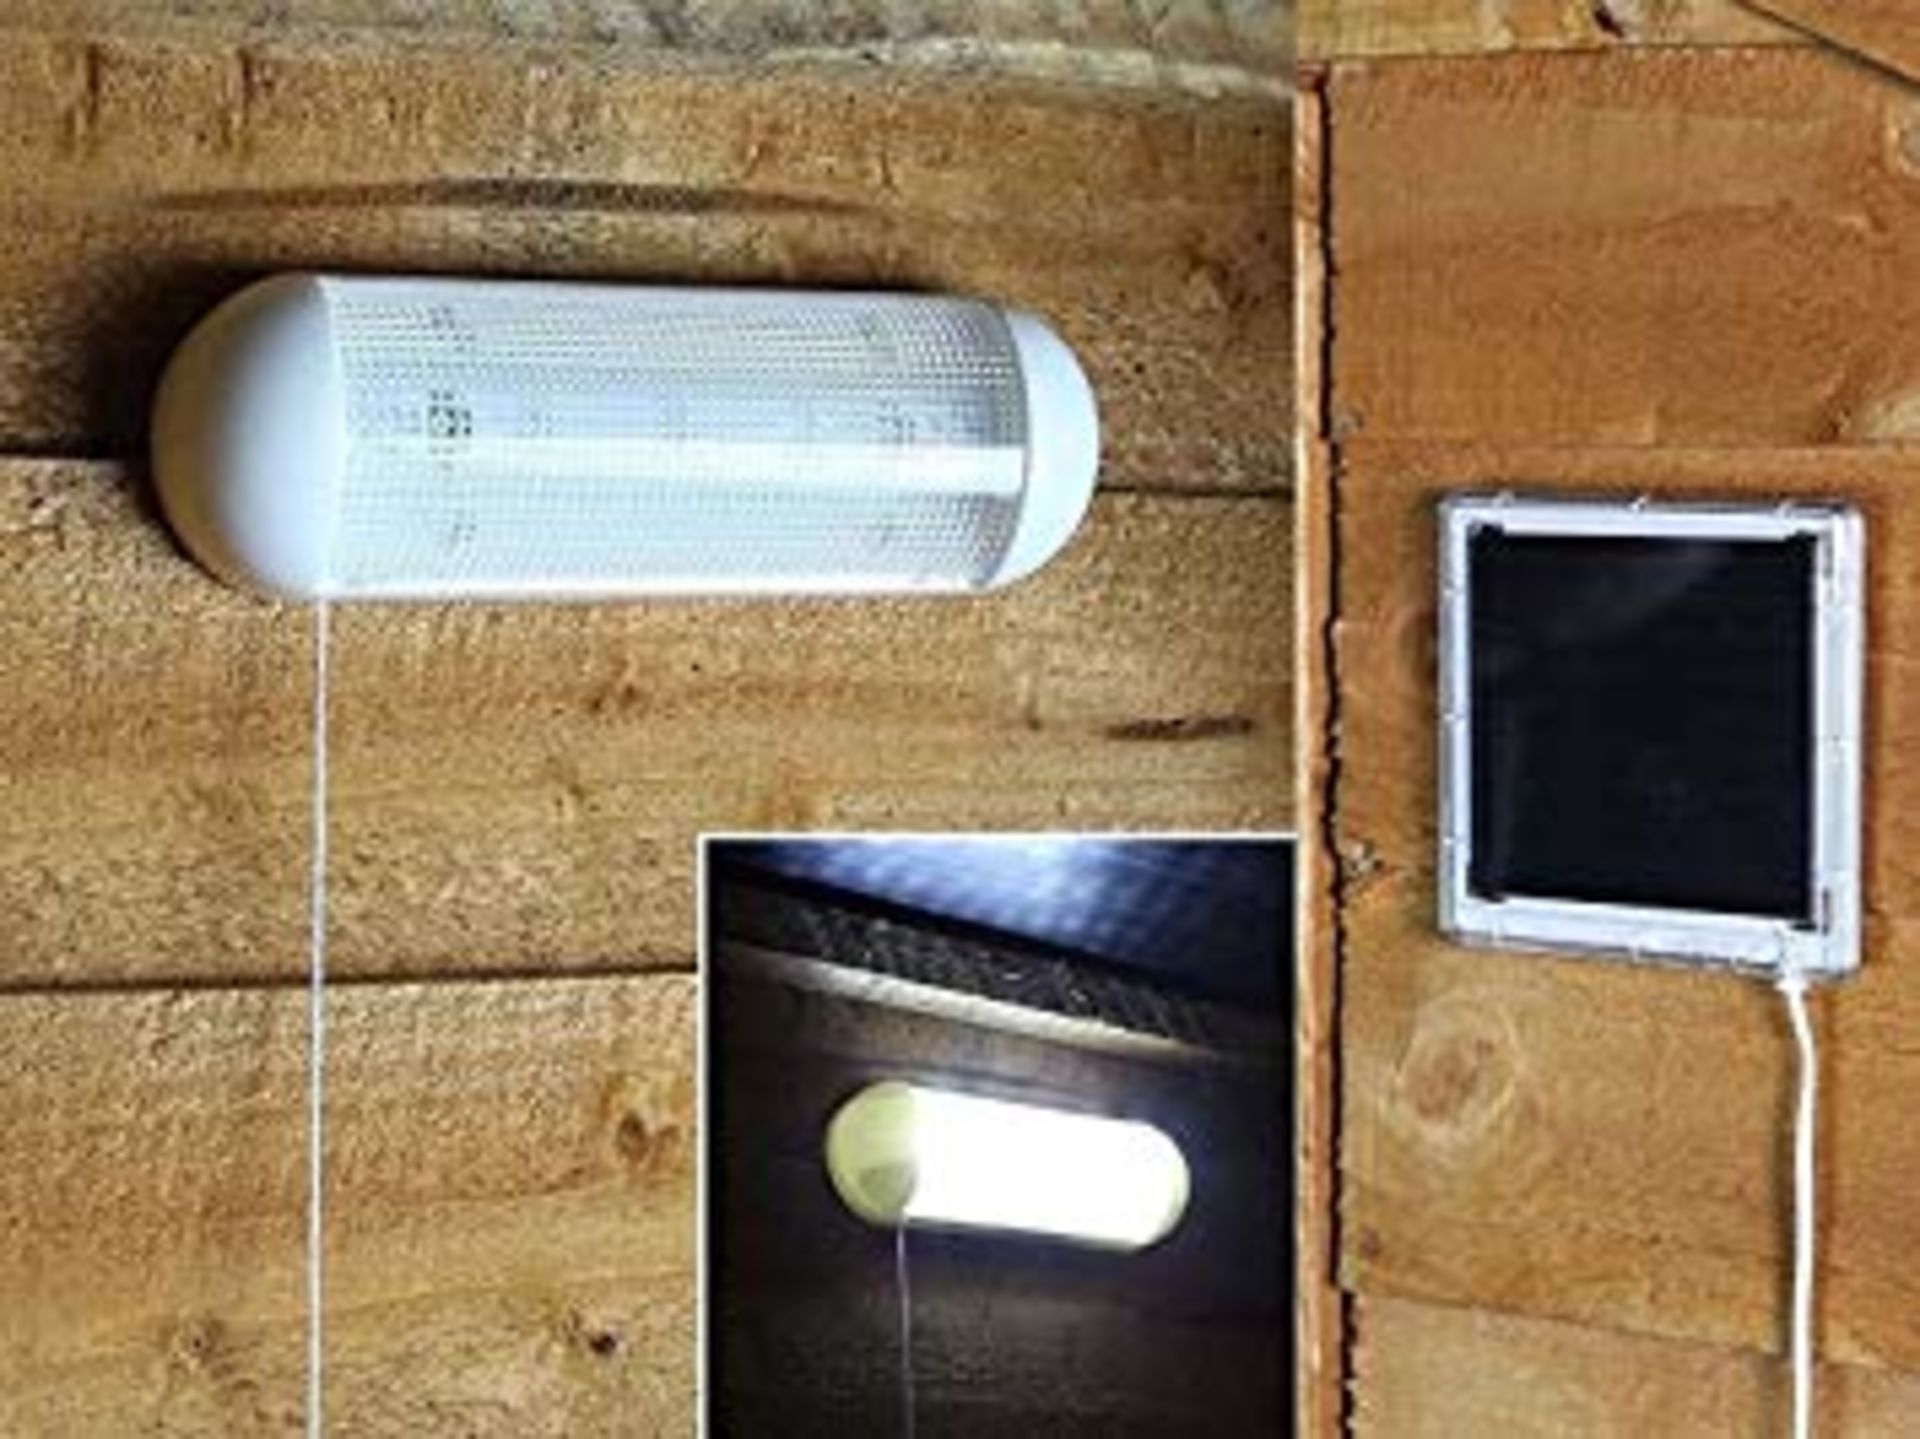 + VAT Brand New Solar Powered Shed Light ISP £23.99 (Amazon) (Image iS Similar To Item)